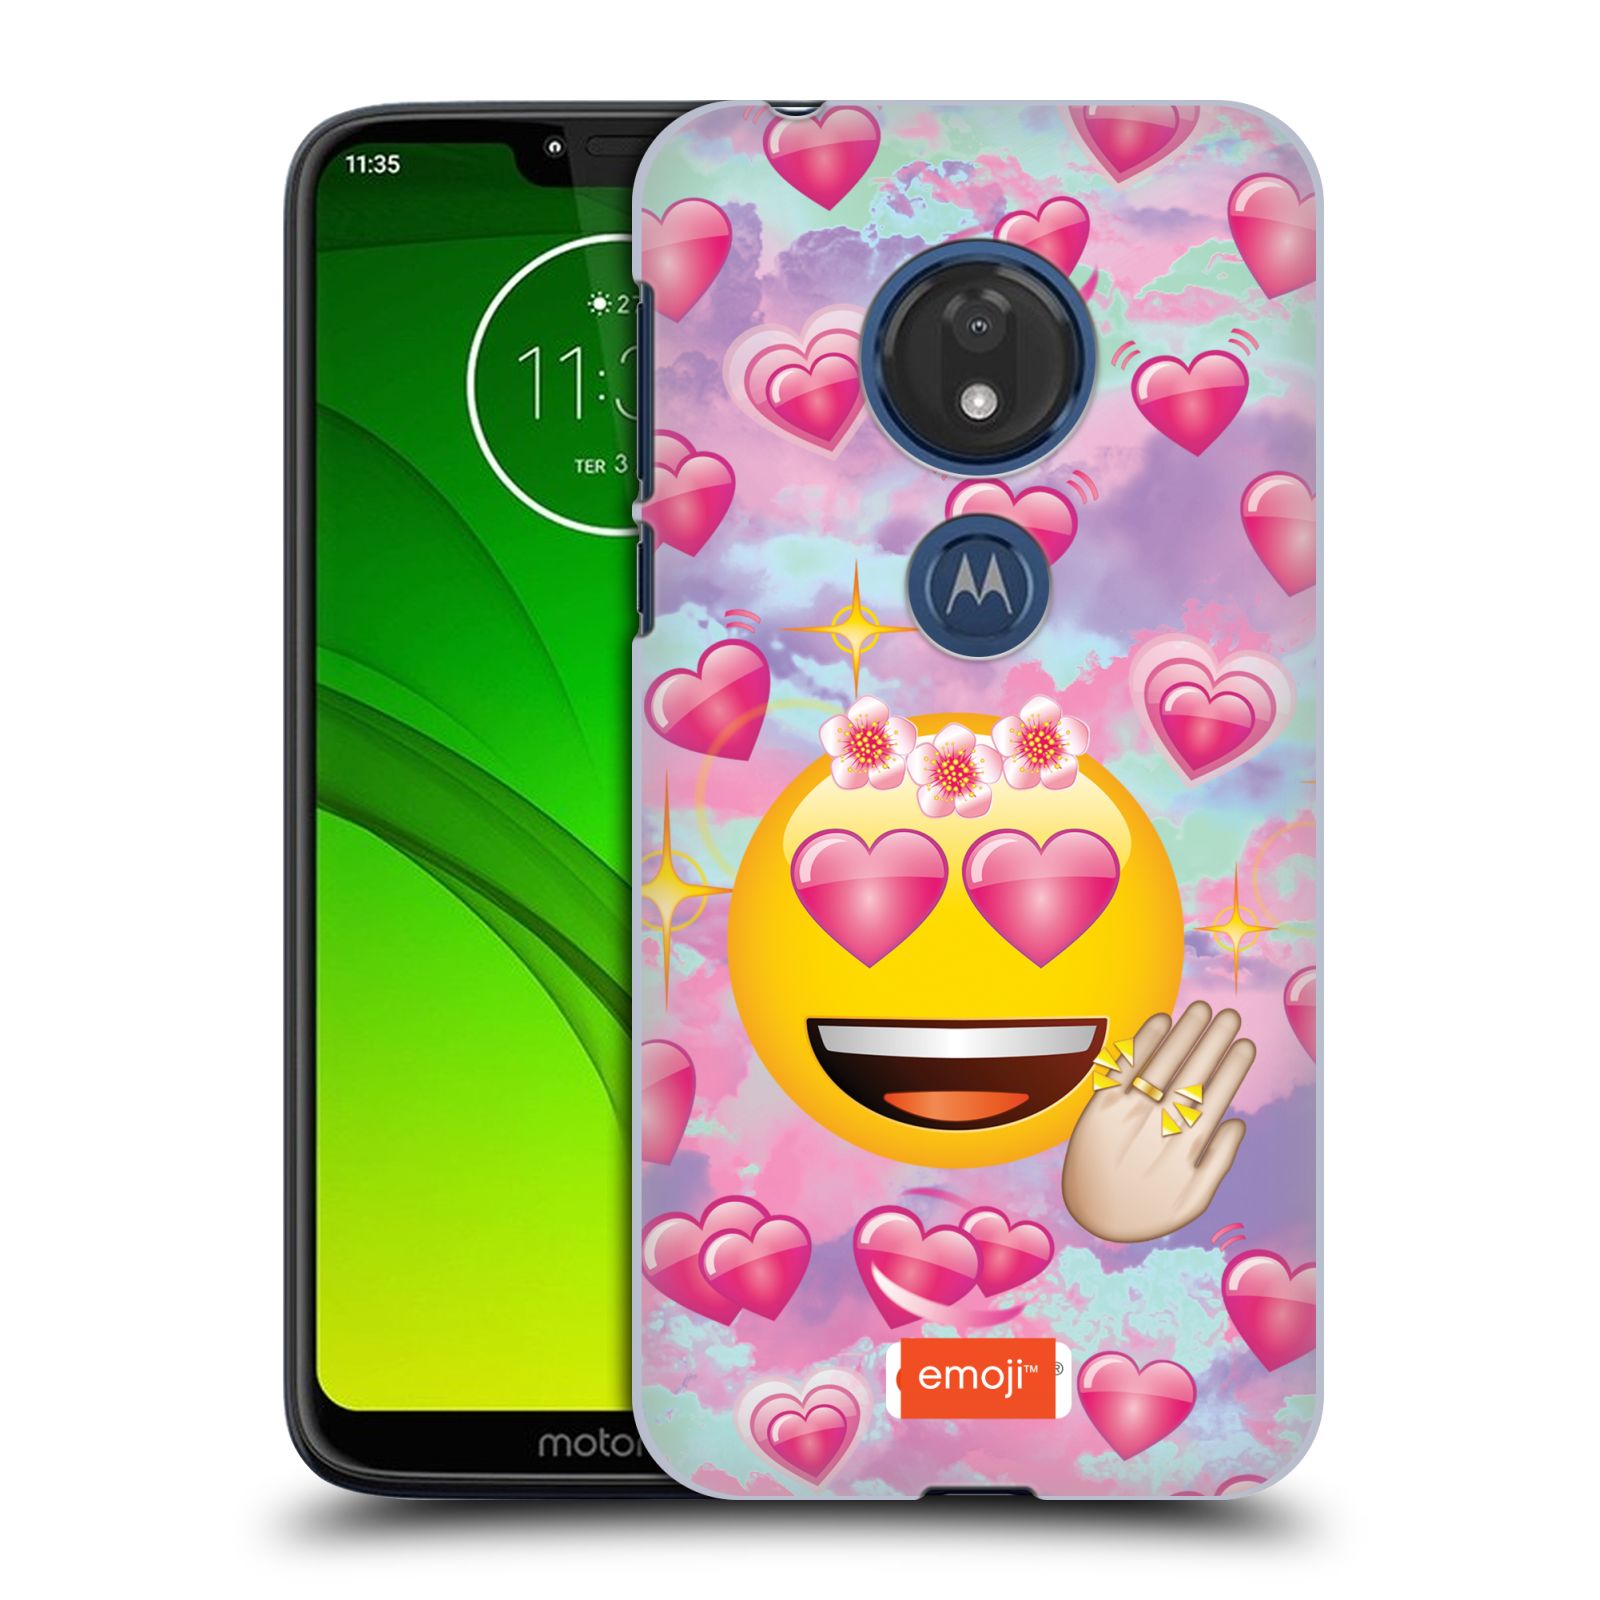 Pouzdro na mobil Motorola Moto G7 Play smajlík oficiální kryt EMOJI velký smajlík růžová srdíčka